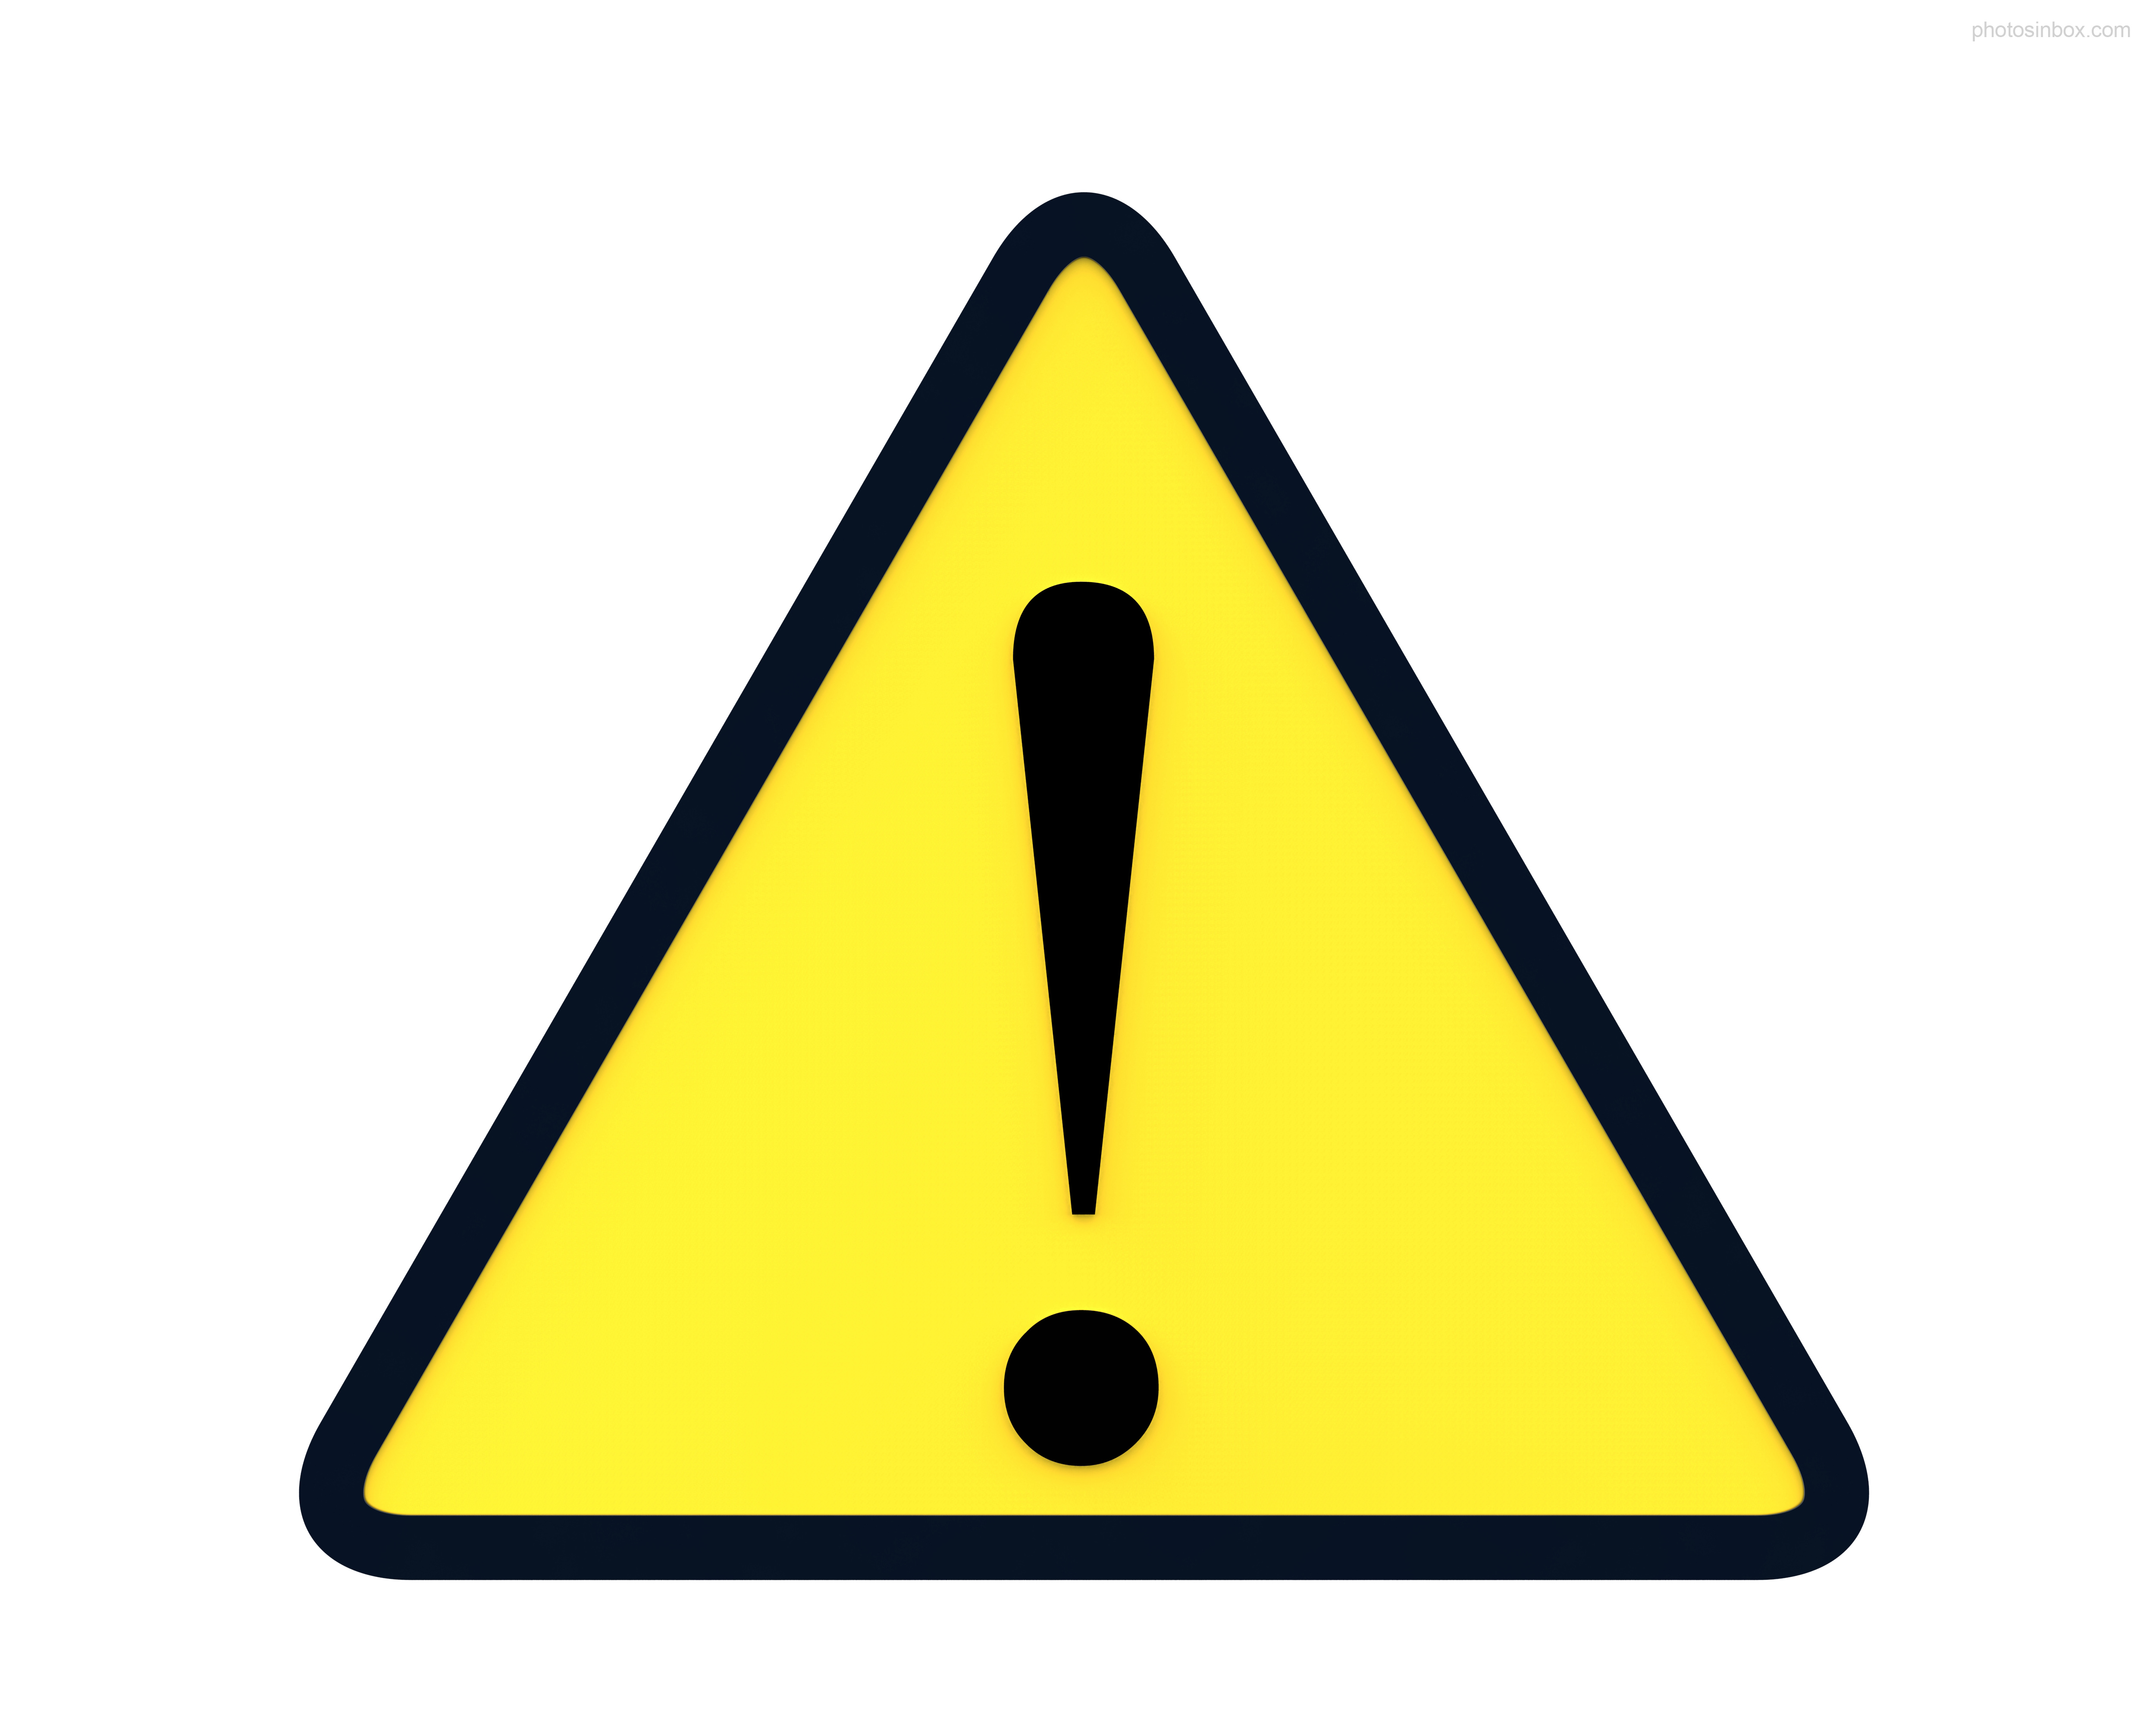 Bmw warning symbol yellow triangle